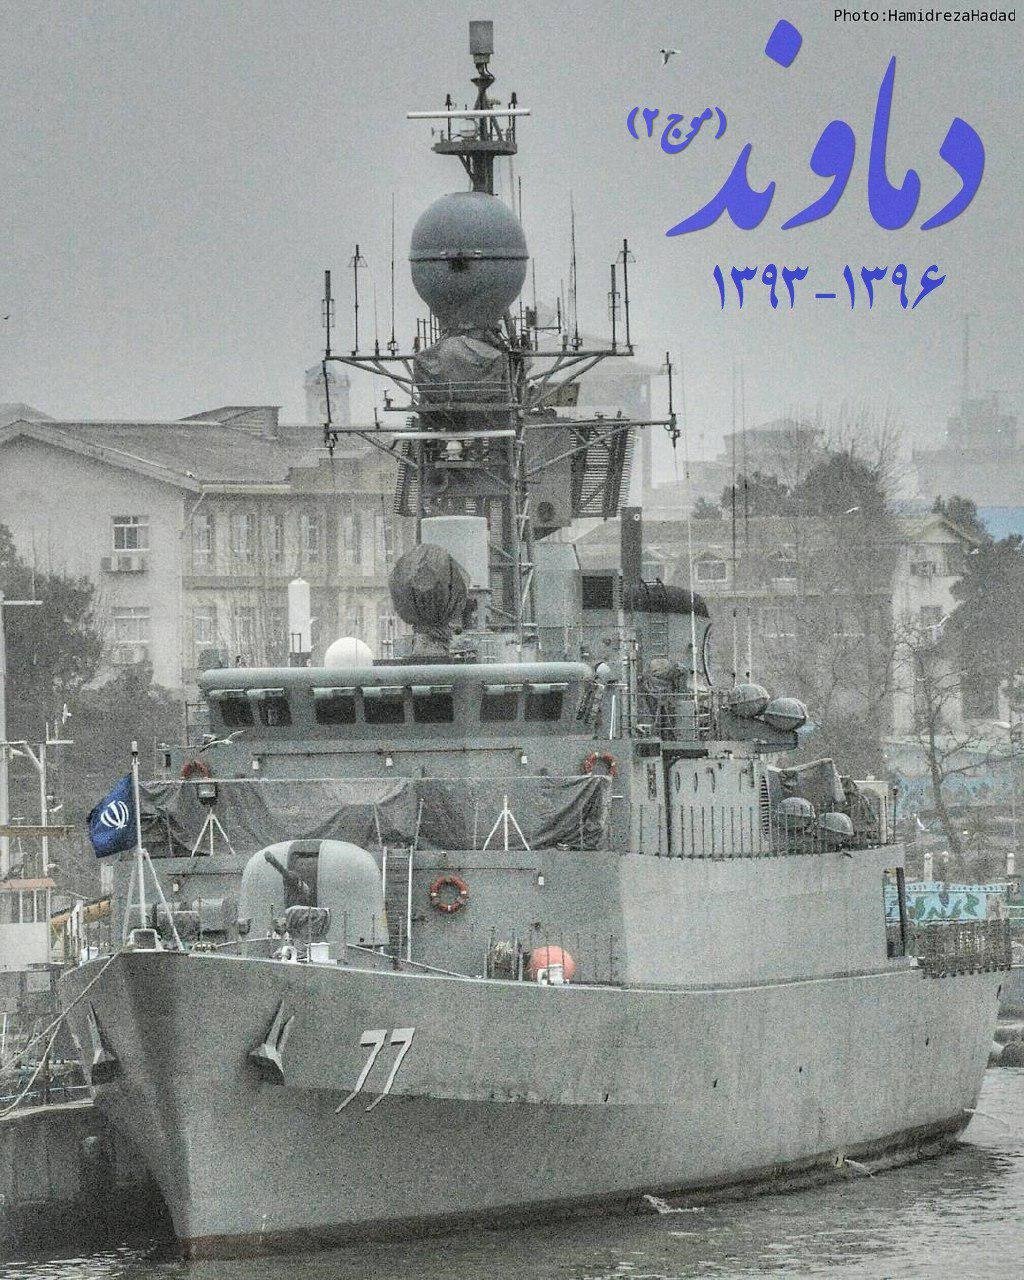 Damavand_Warship-Military_ir.jpg